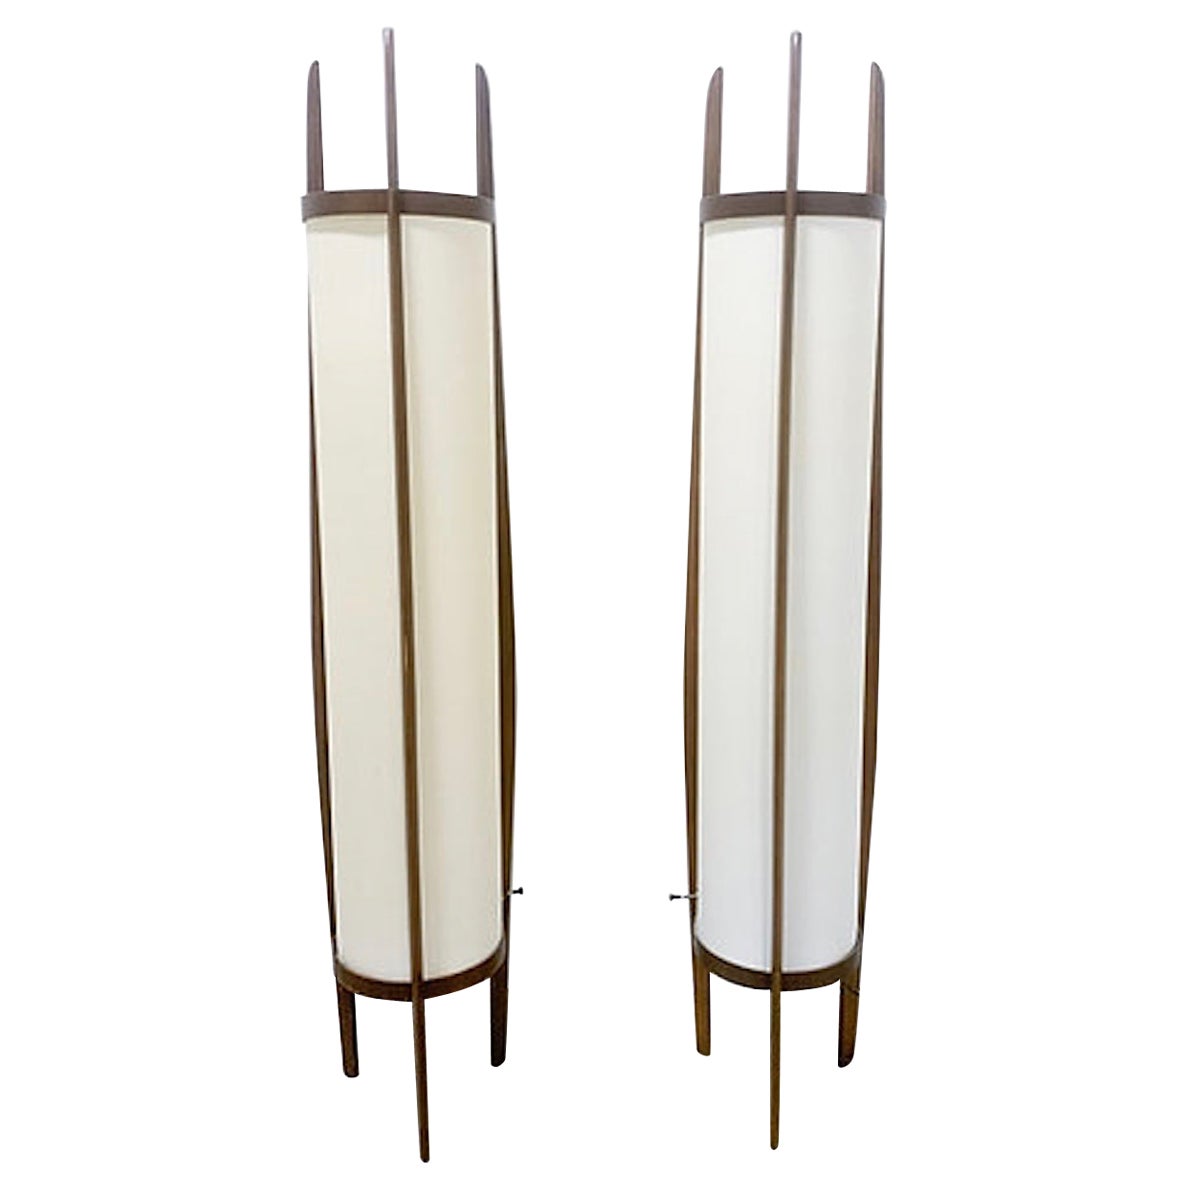 Six-Foot-Tall Walnut Modeline Lamps